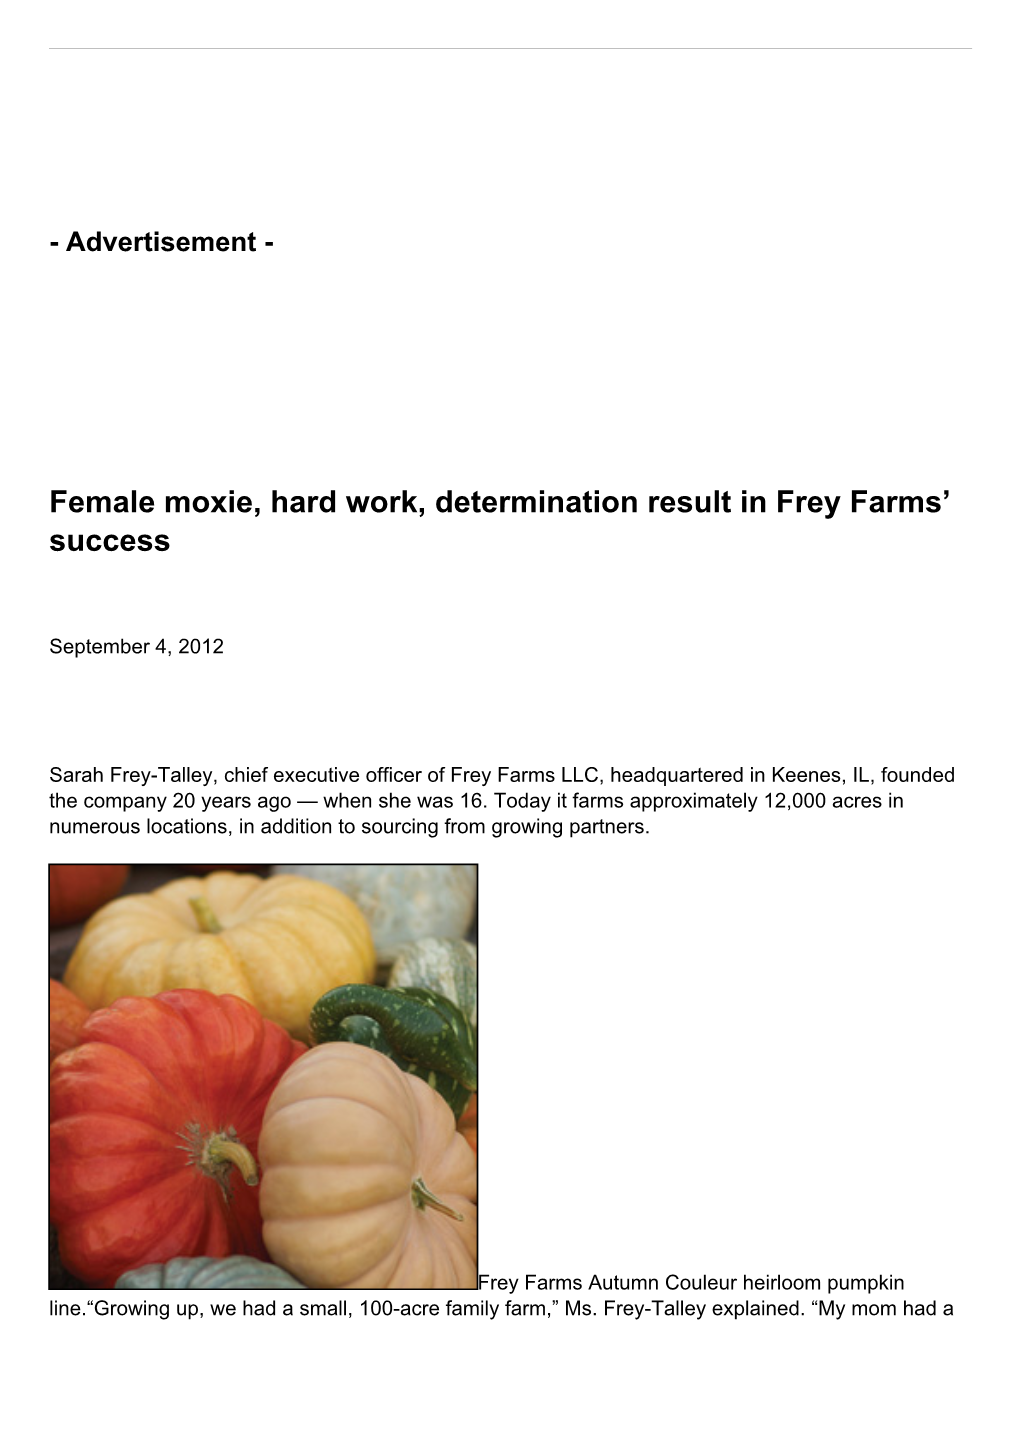 Female Moxie, Hard Work, Determination Result in Frey Farms' Success